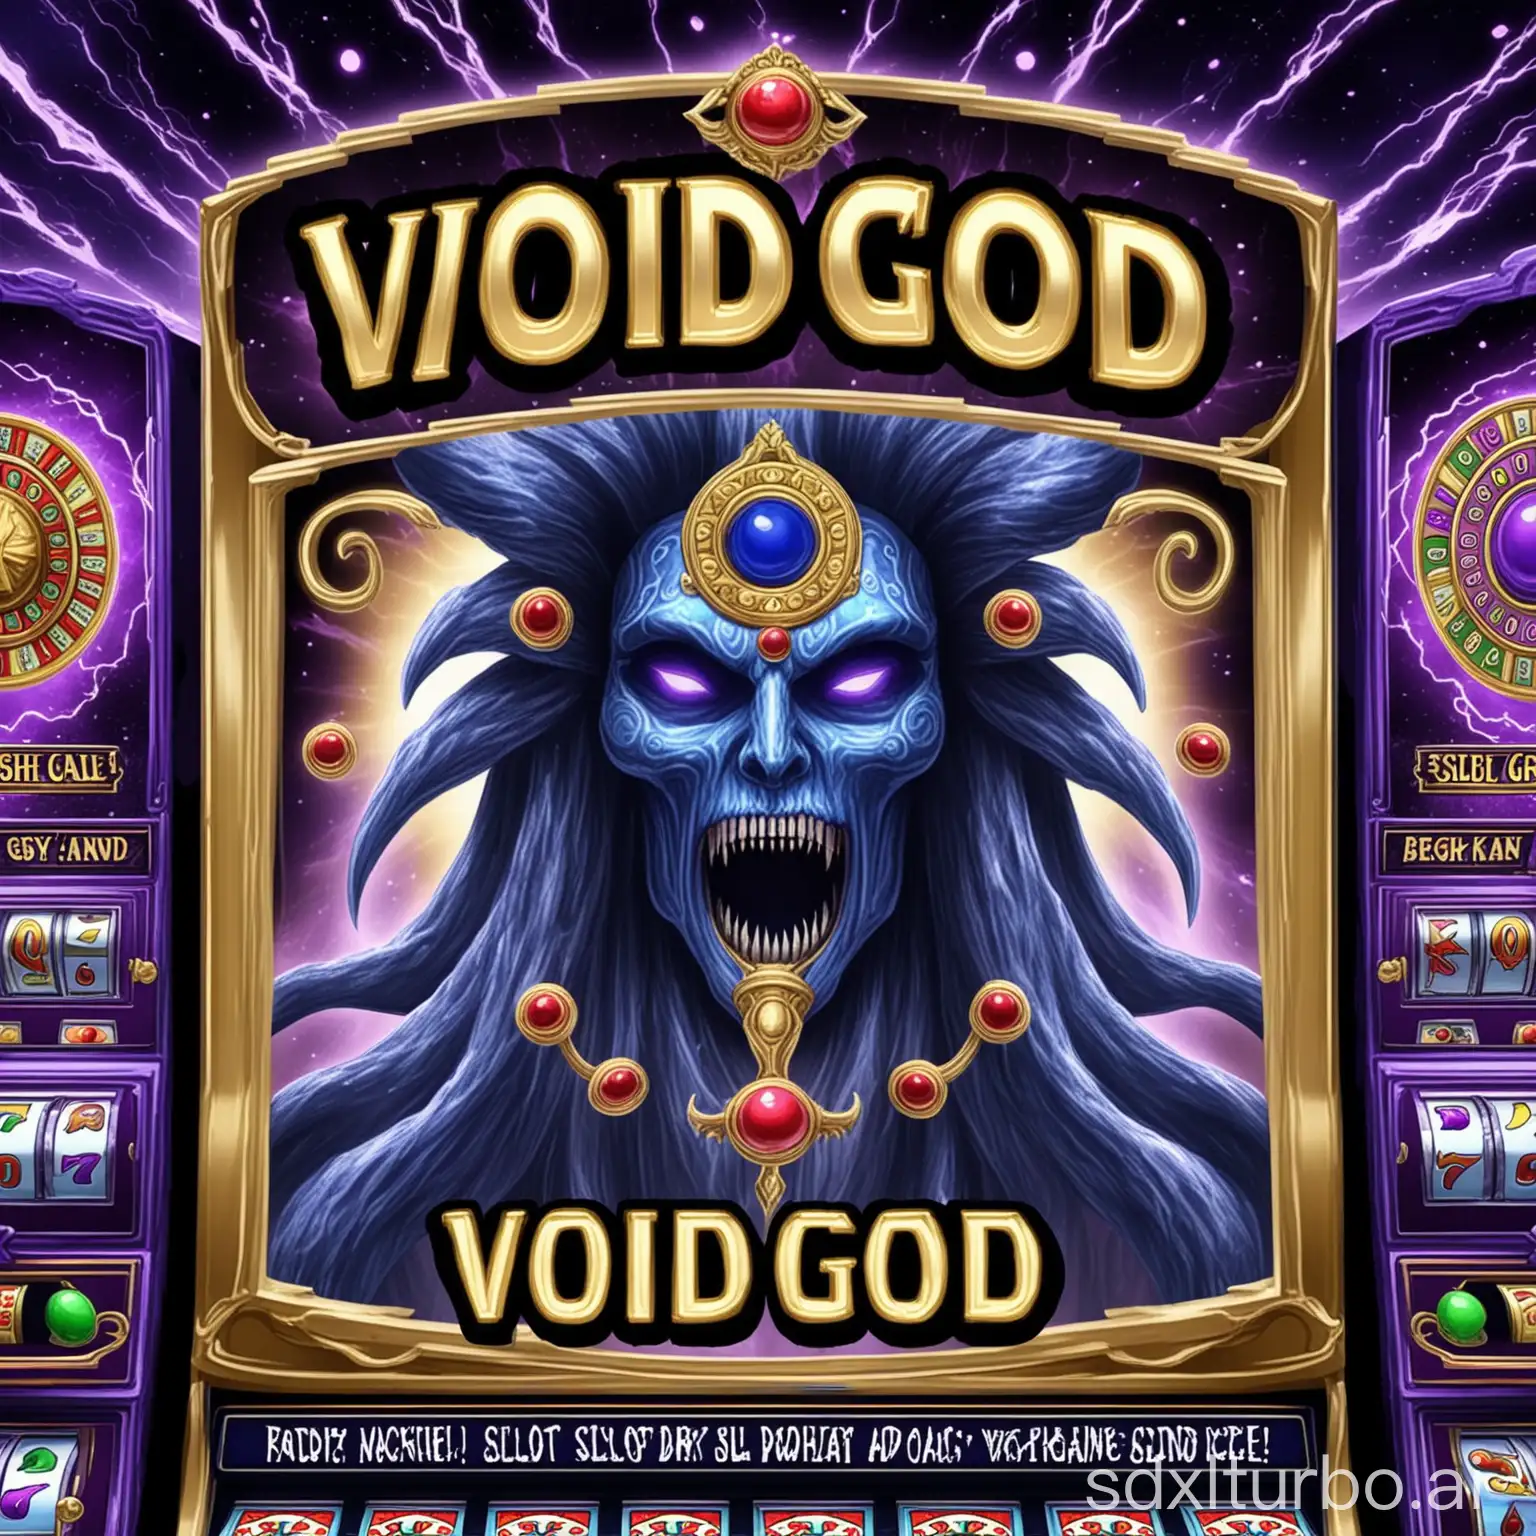 Void god slot machine fb ad picture